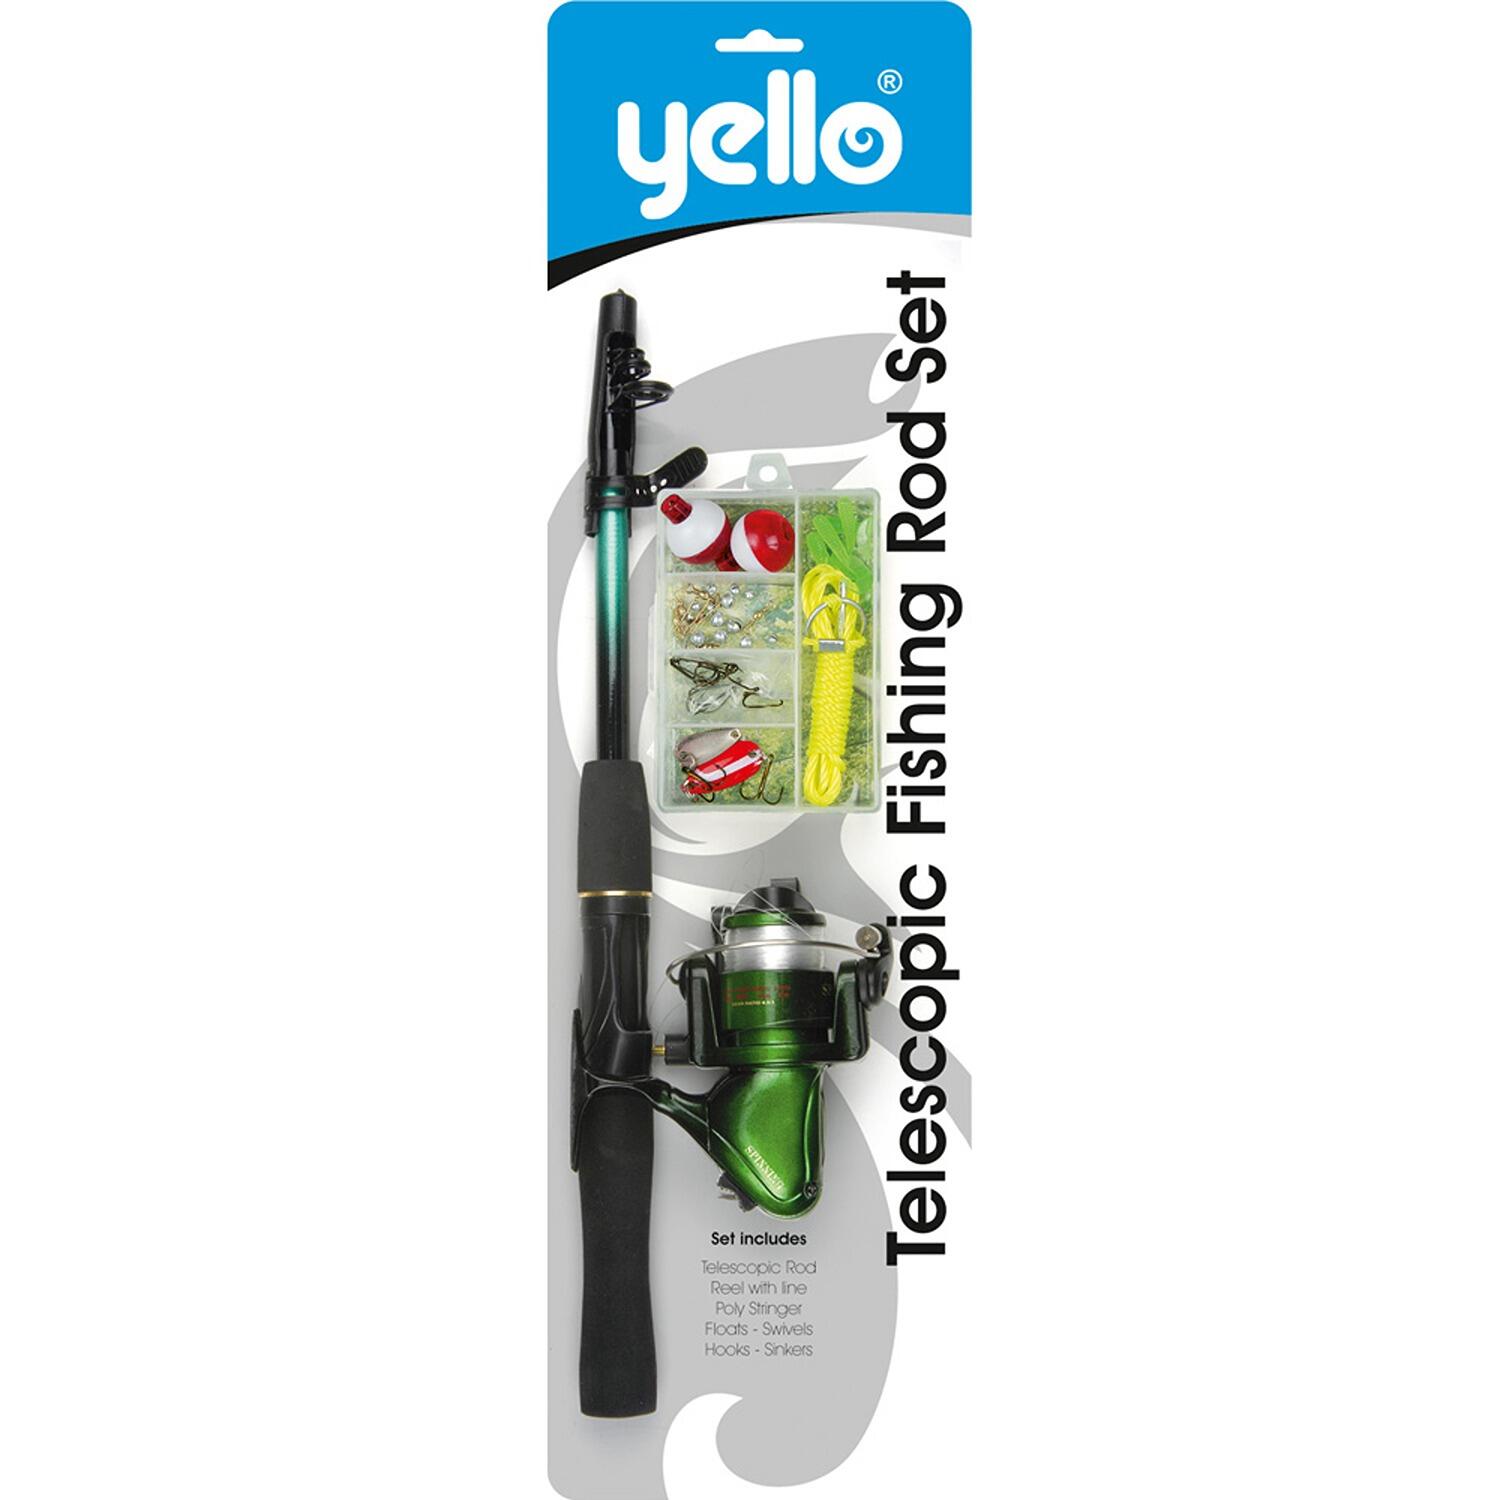 Yello Telescopic Junior Fishing Rod Set 1/1